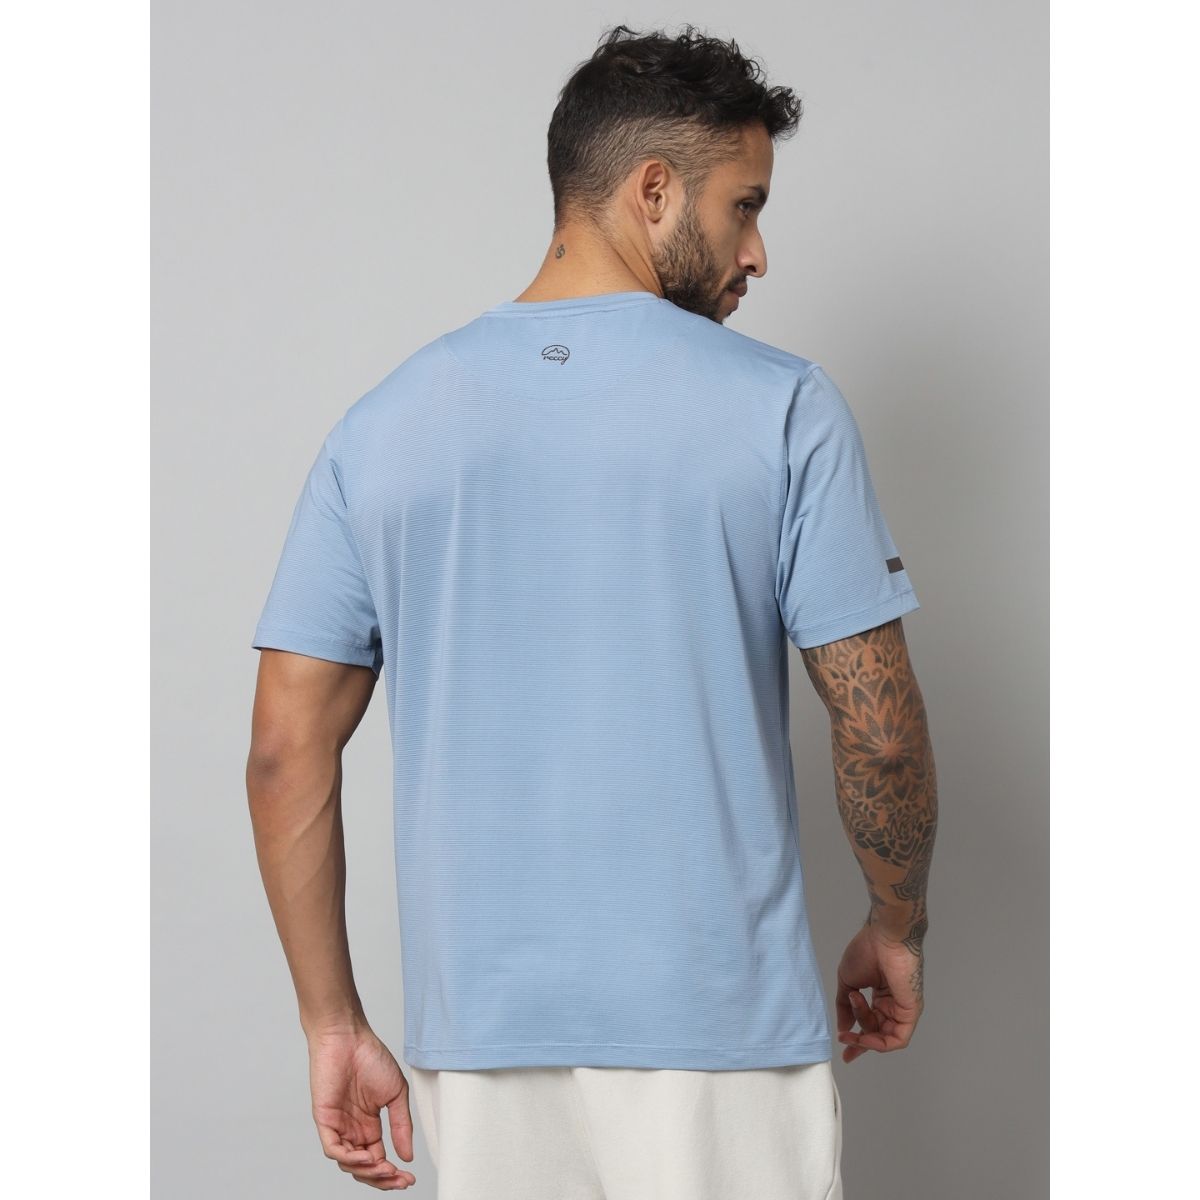 Men's Ultralight Athletic Half Sleeves T-Shirt - Dusk Blue 3